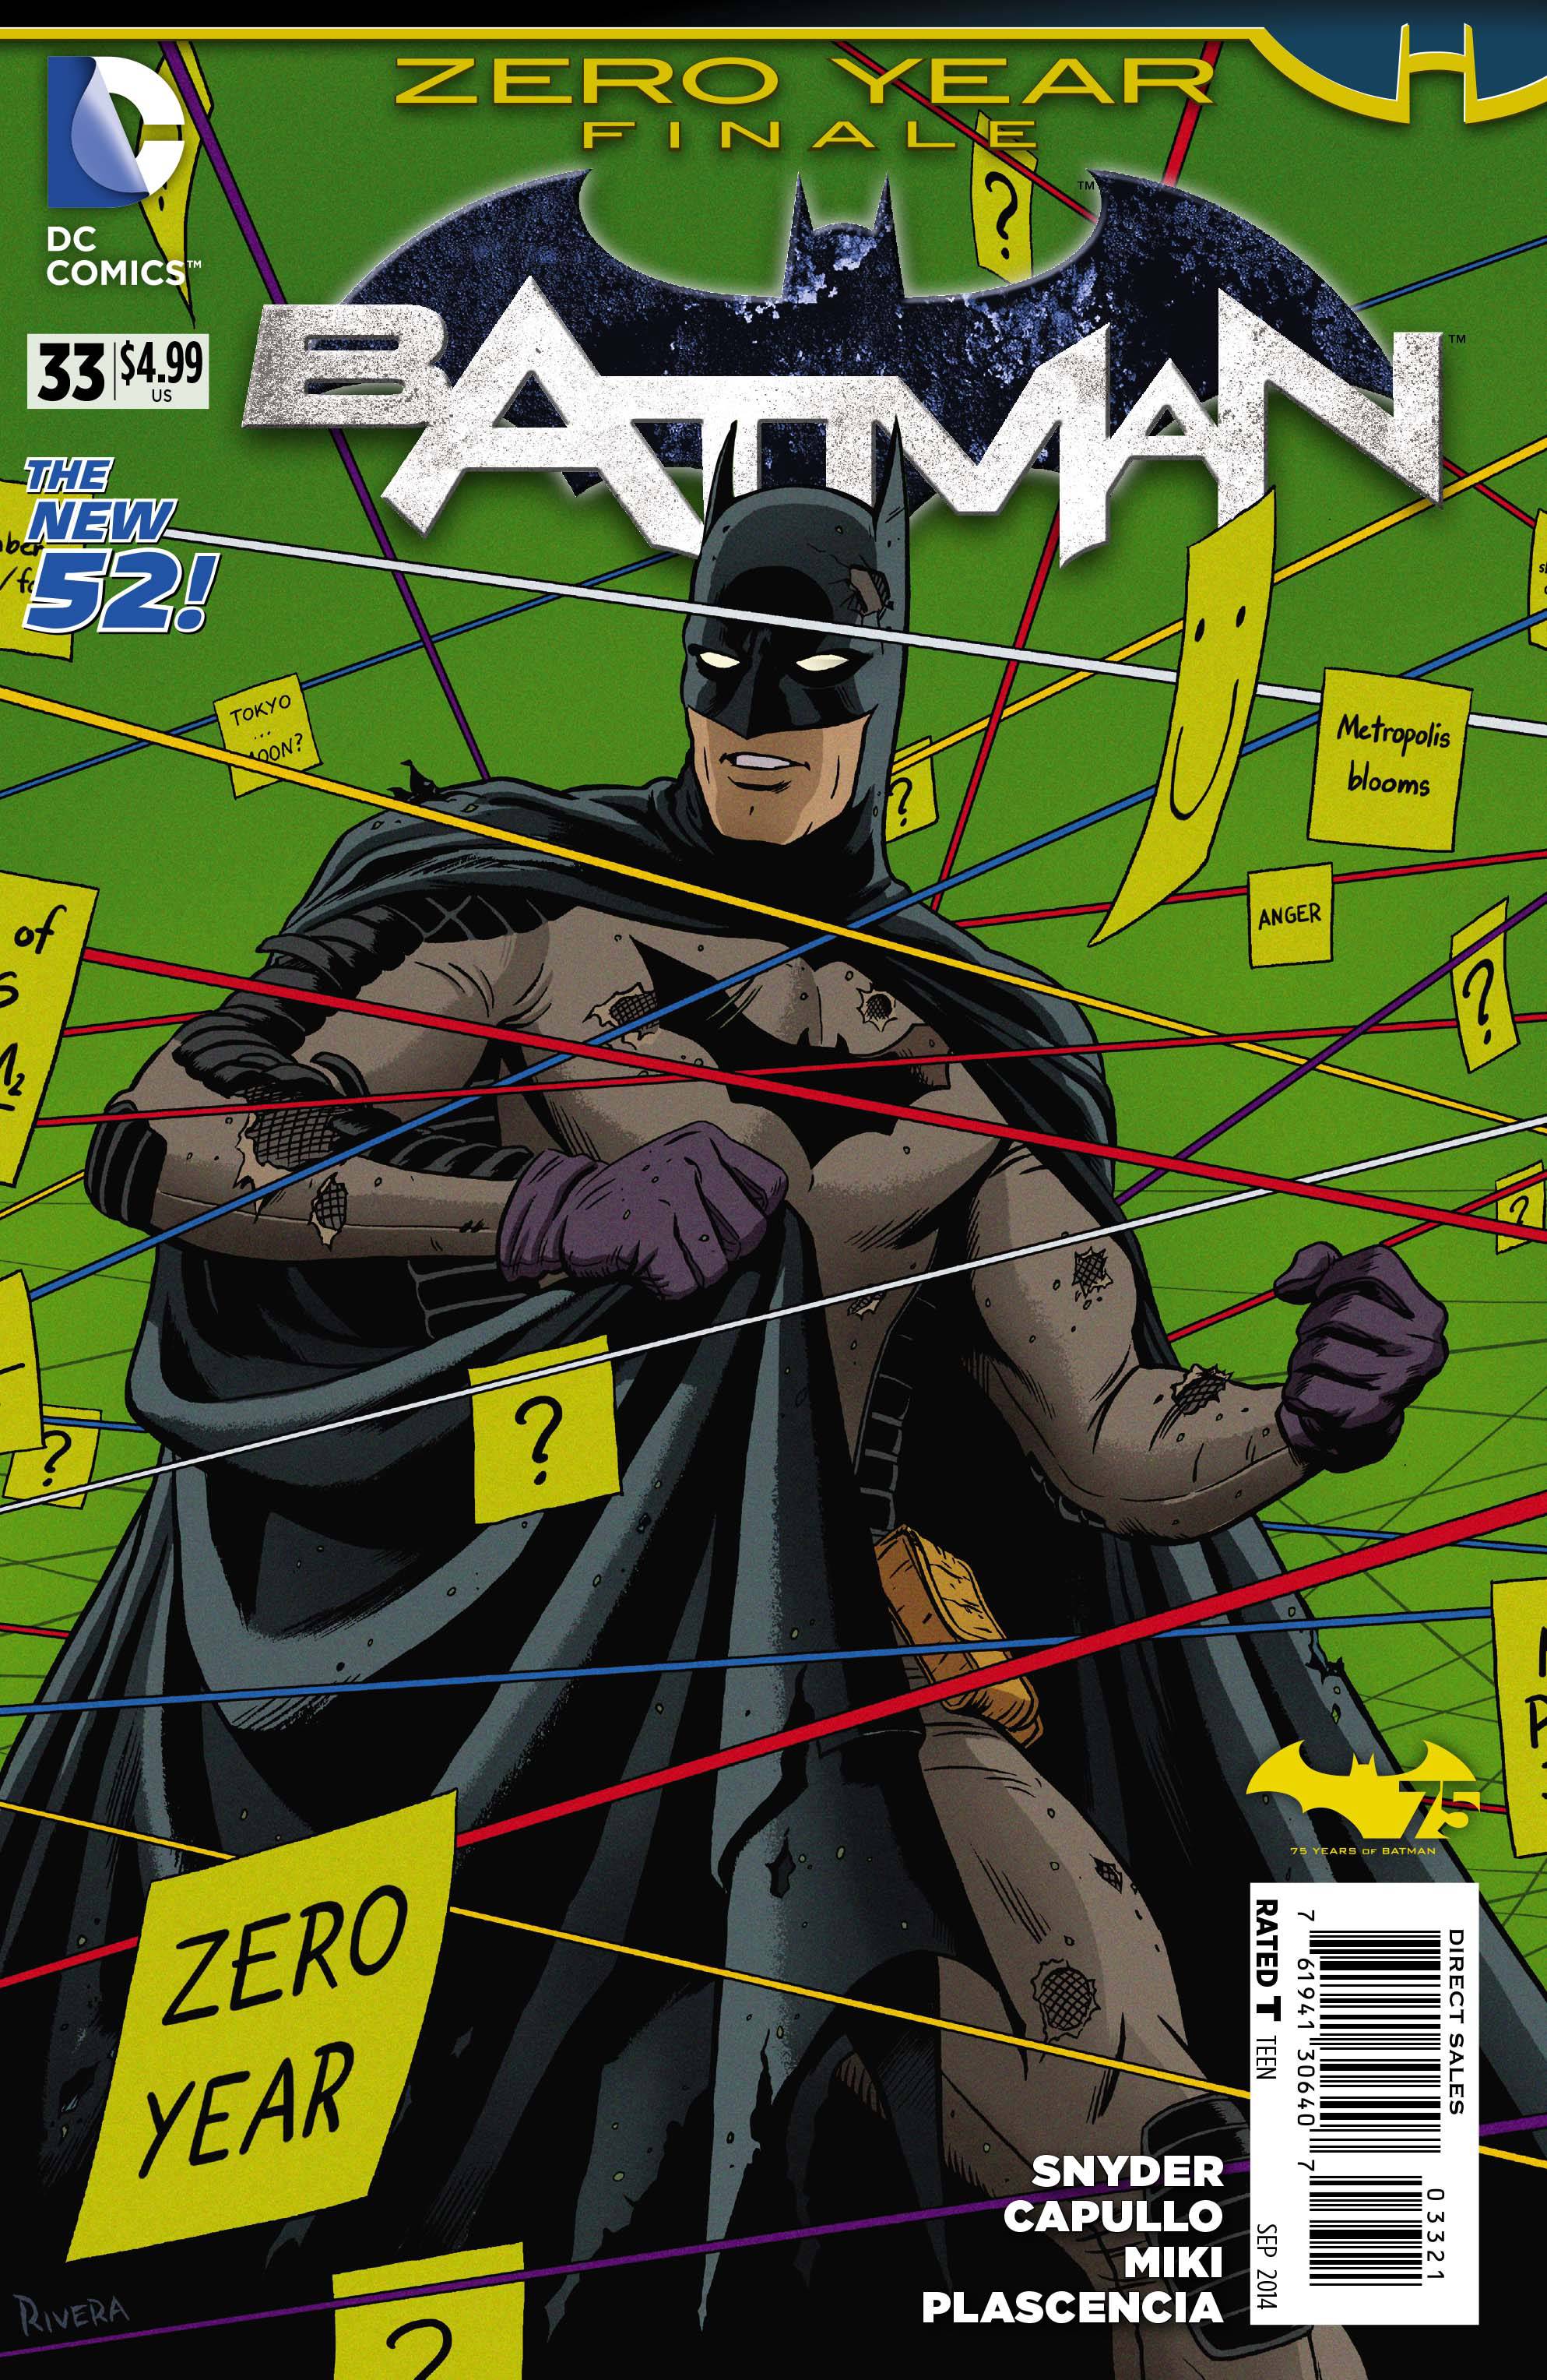 Batman #33 Variant Edition (Zero Year) (2011)